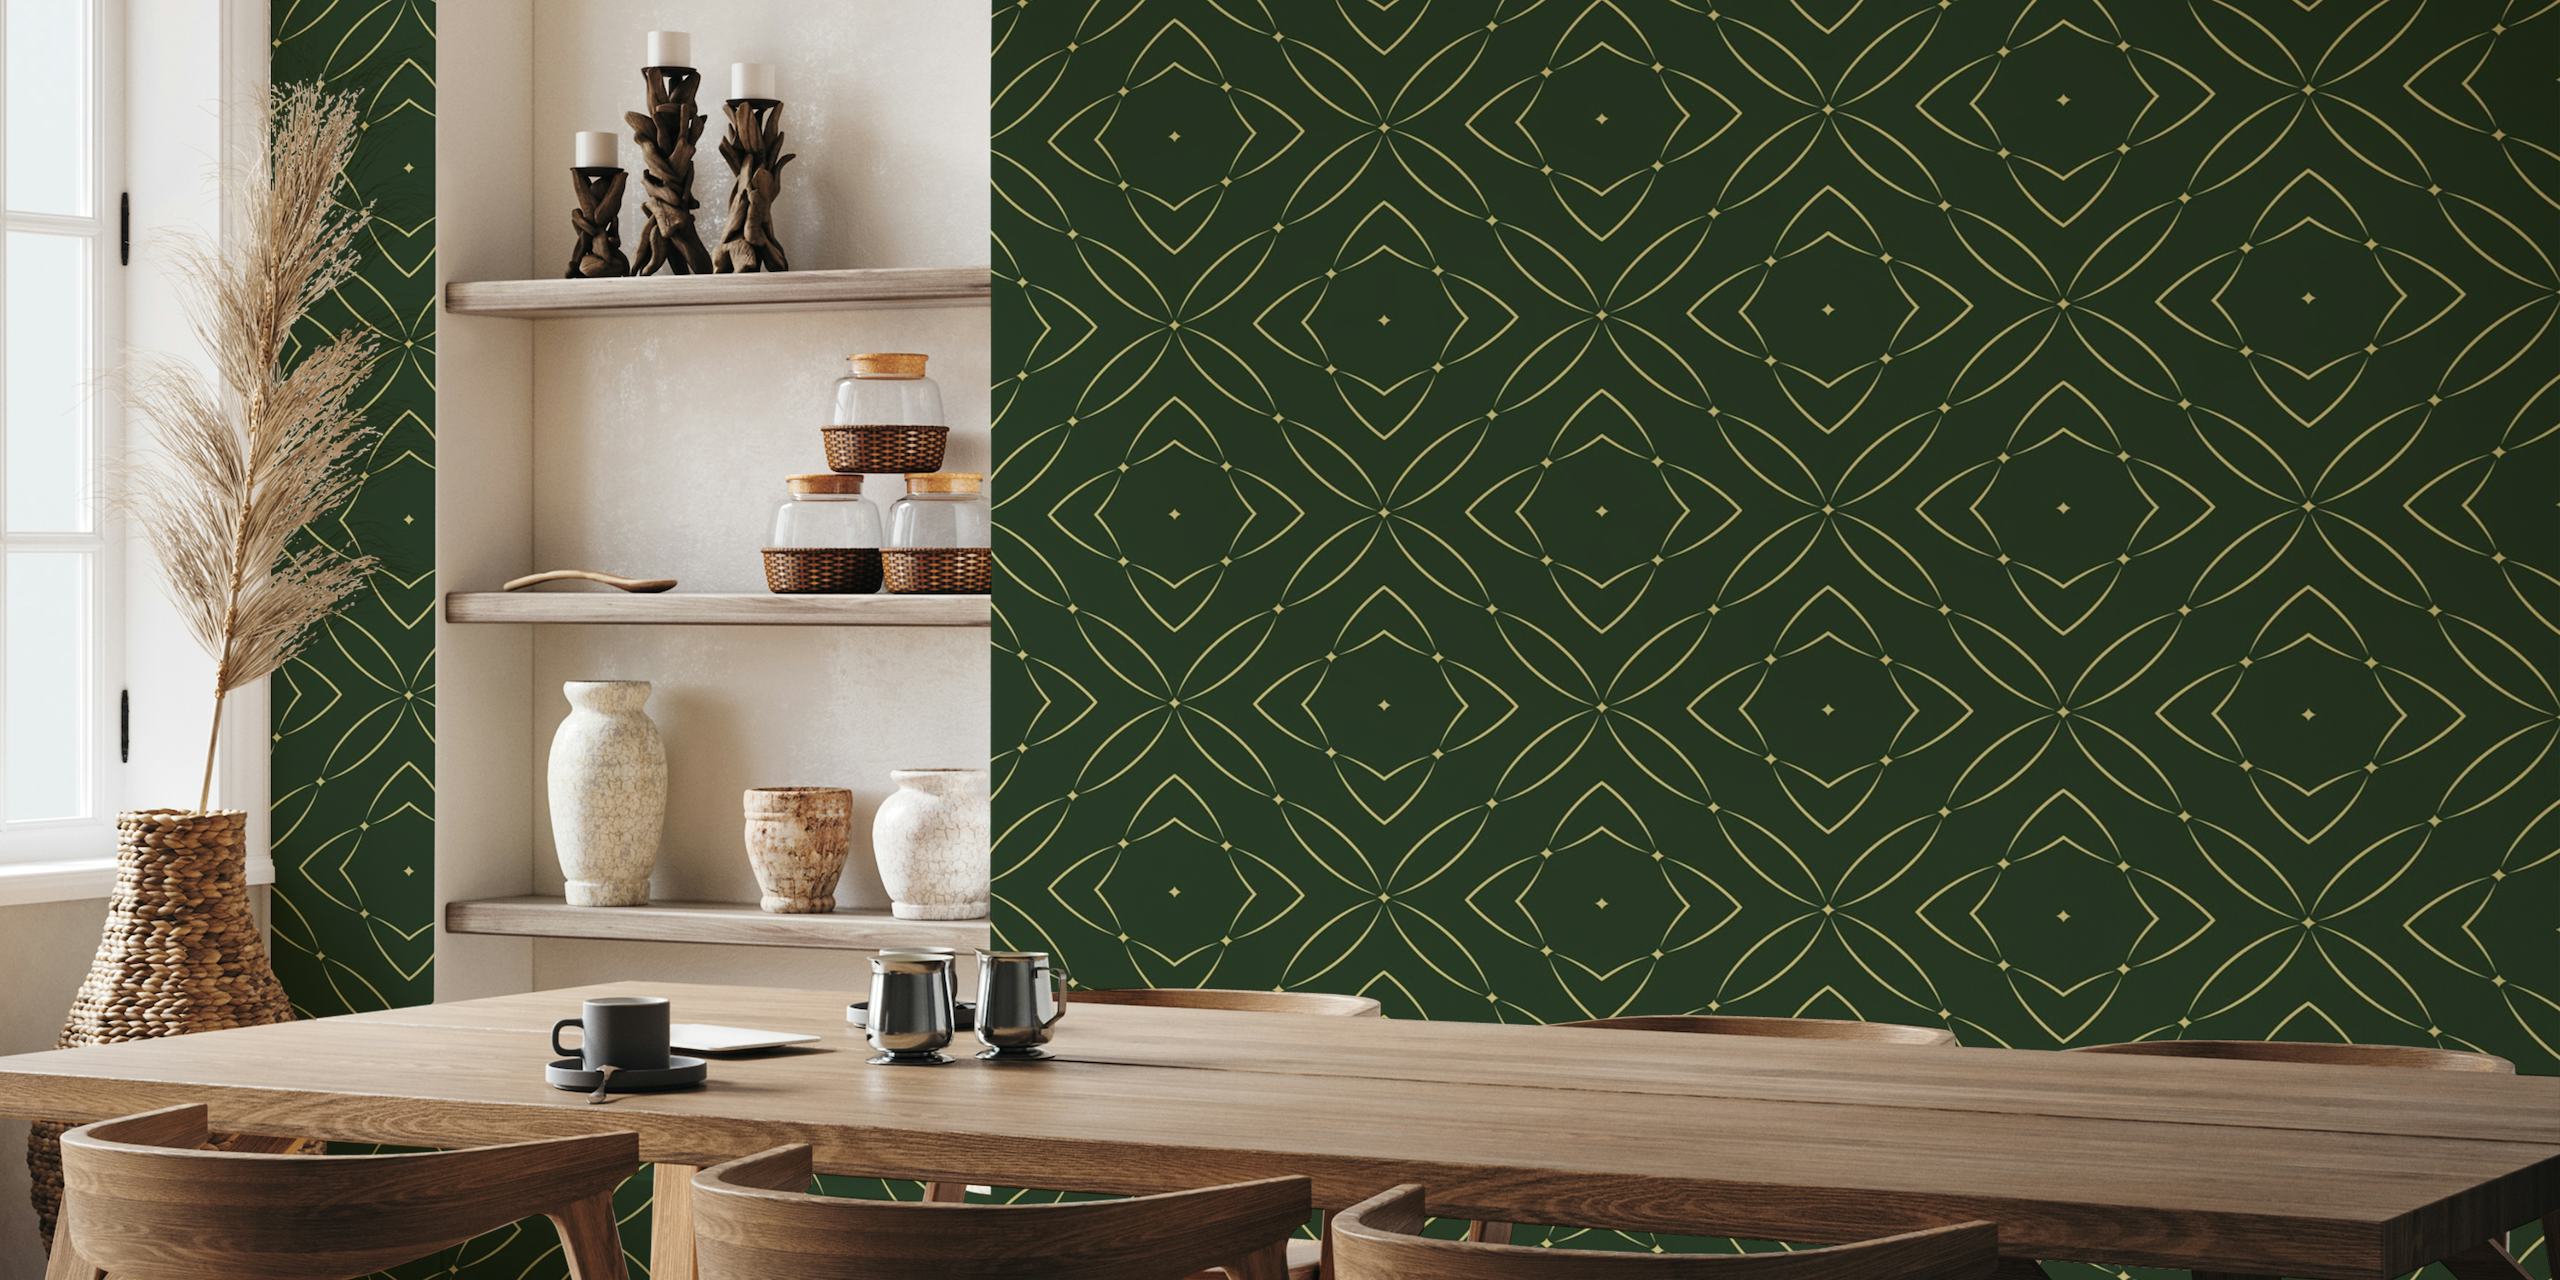 Elegant geometric pattern wall mural in rich emerald tones